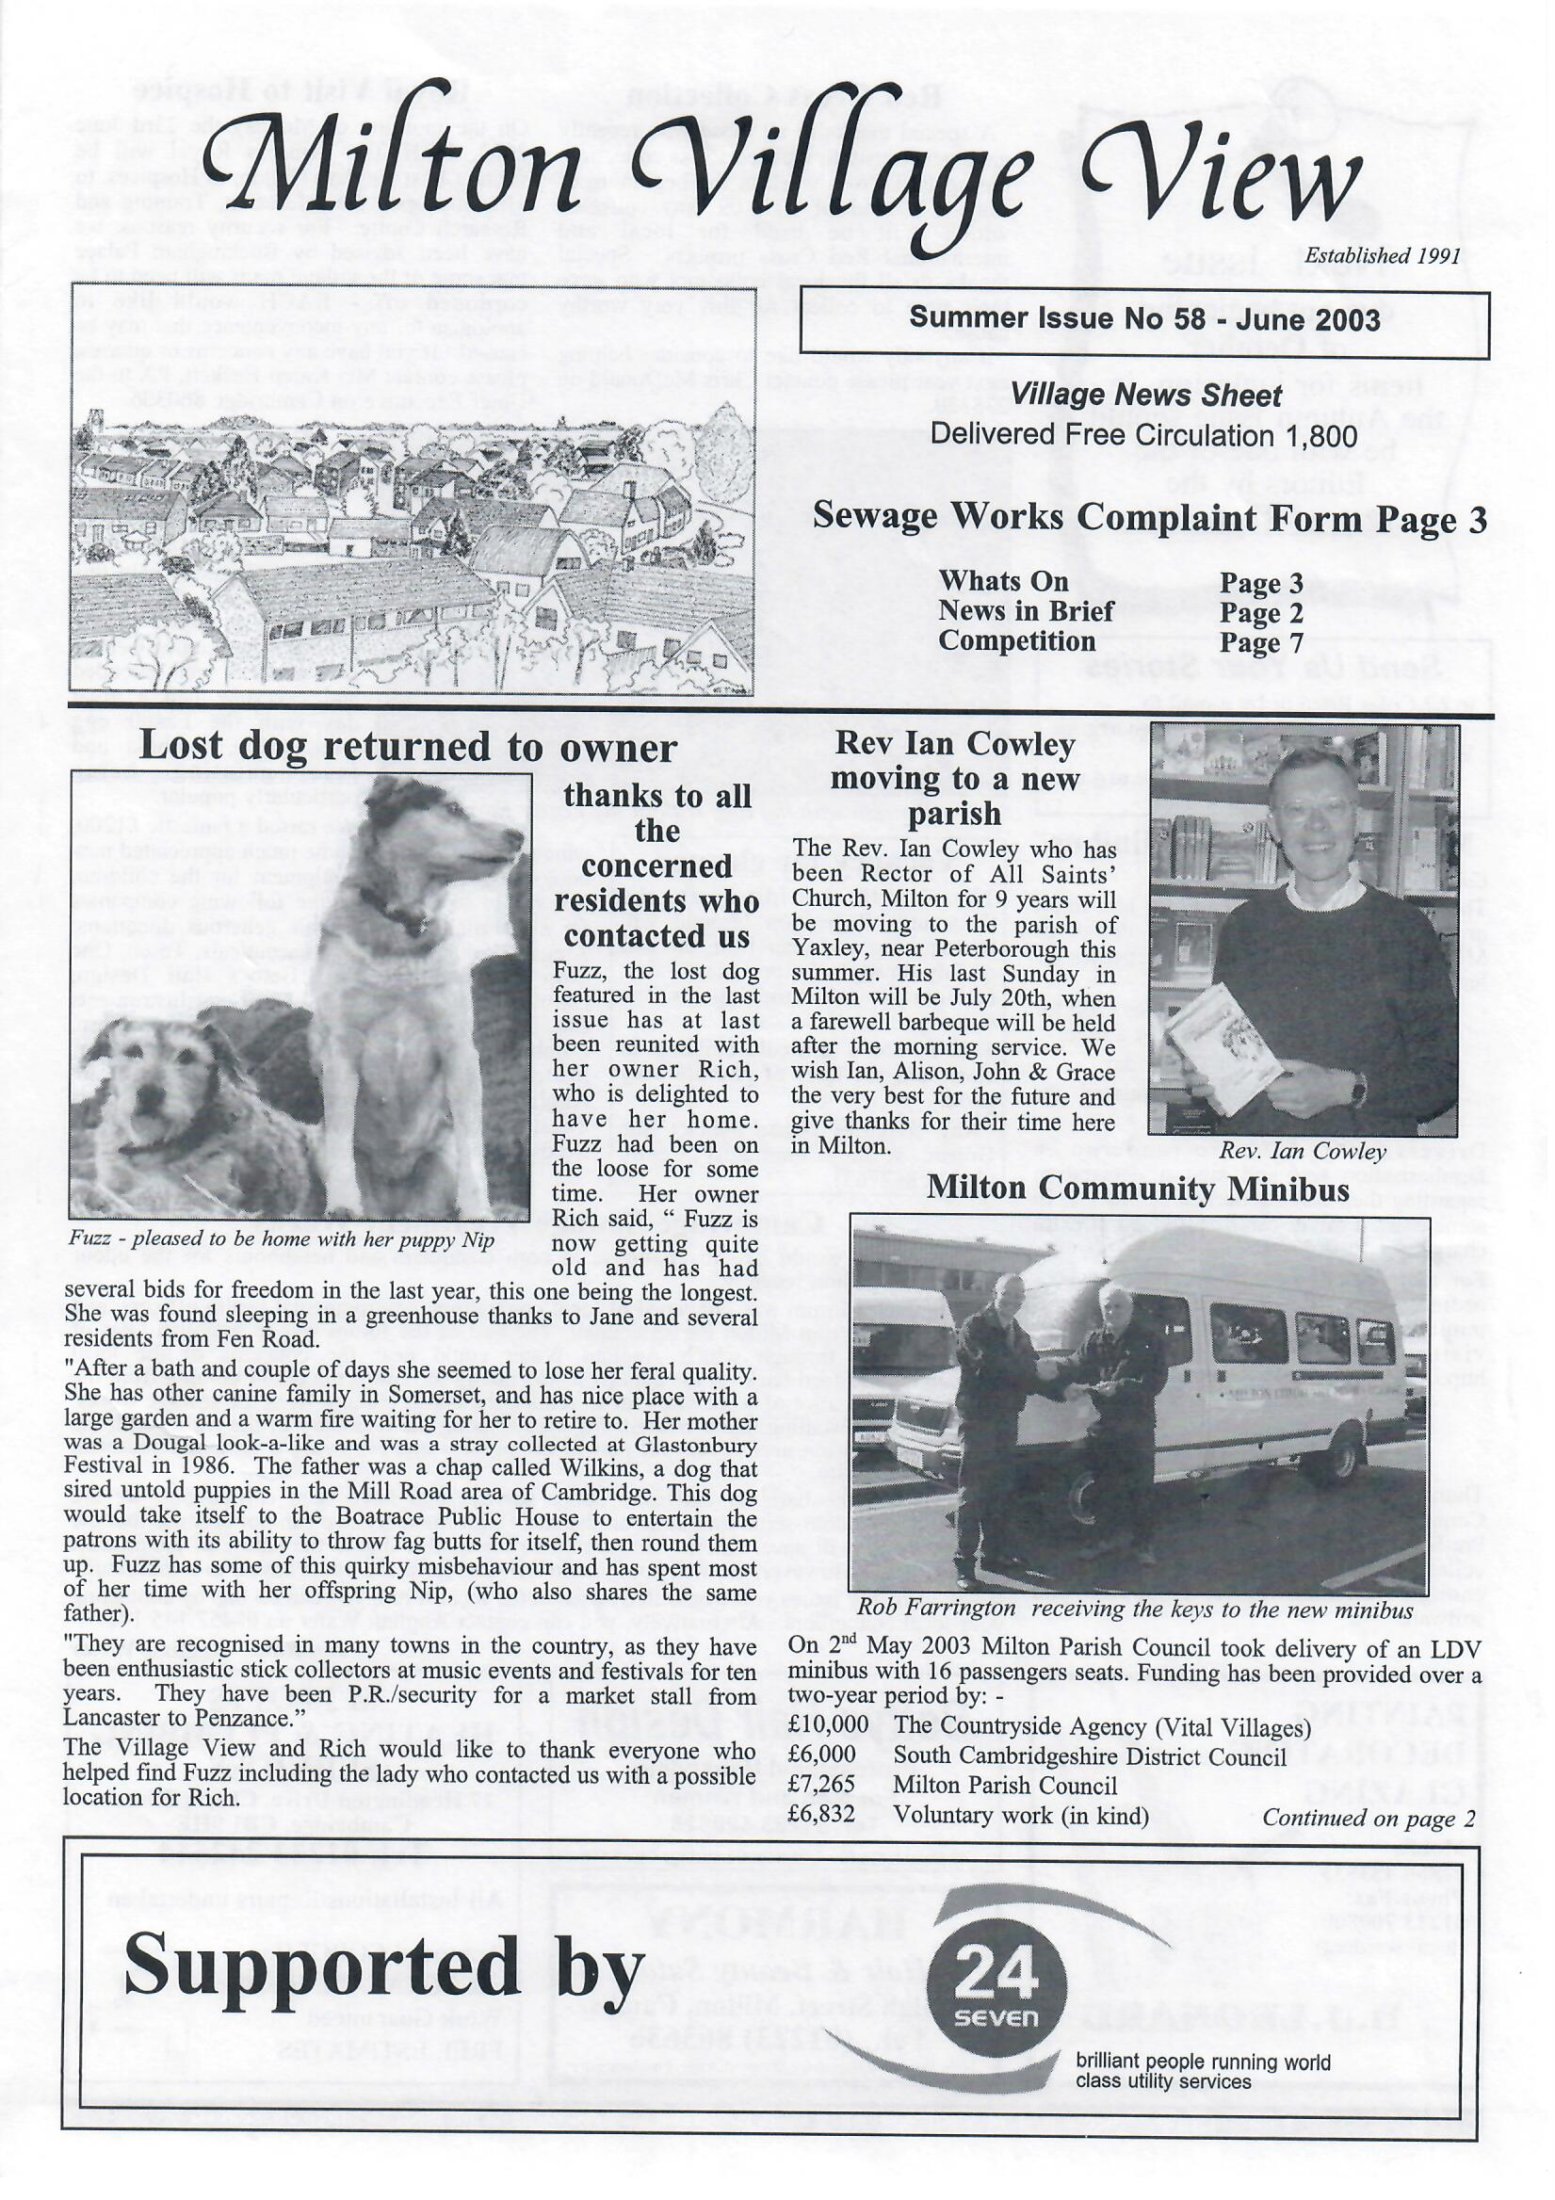 VV Issue 58 June 2003